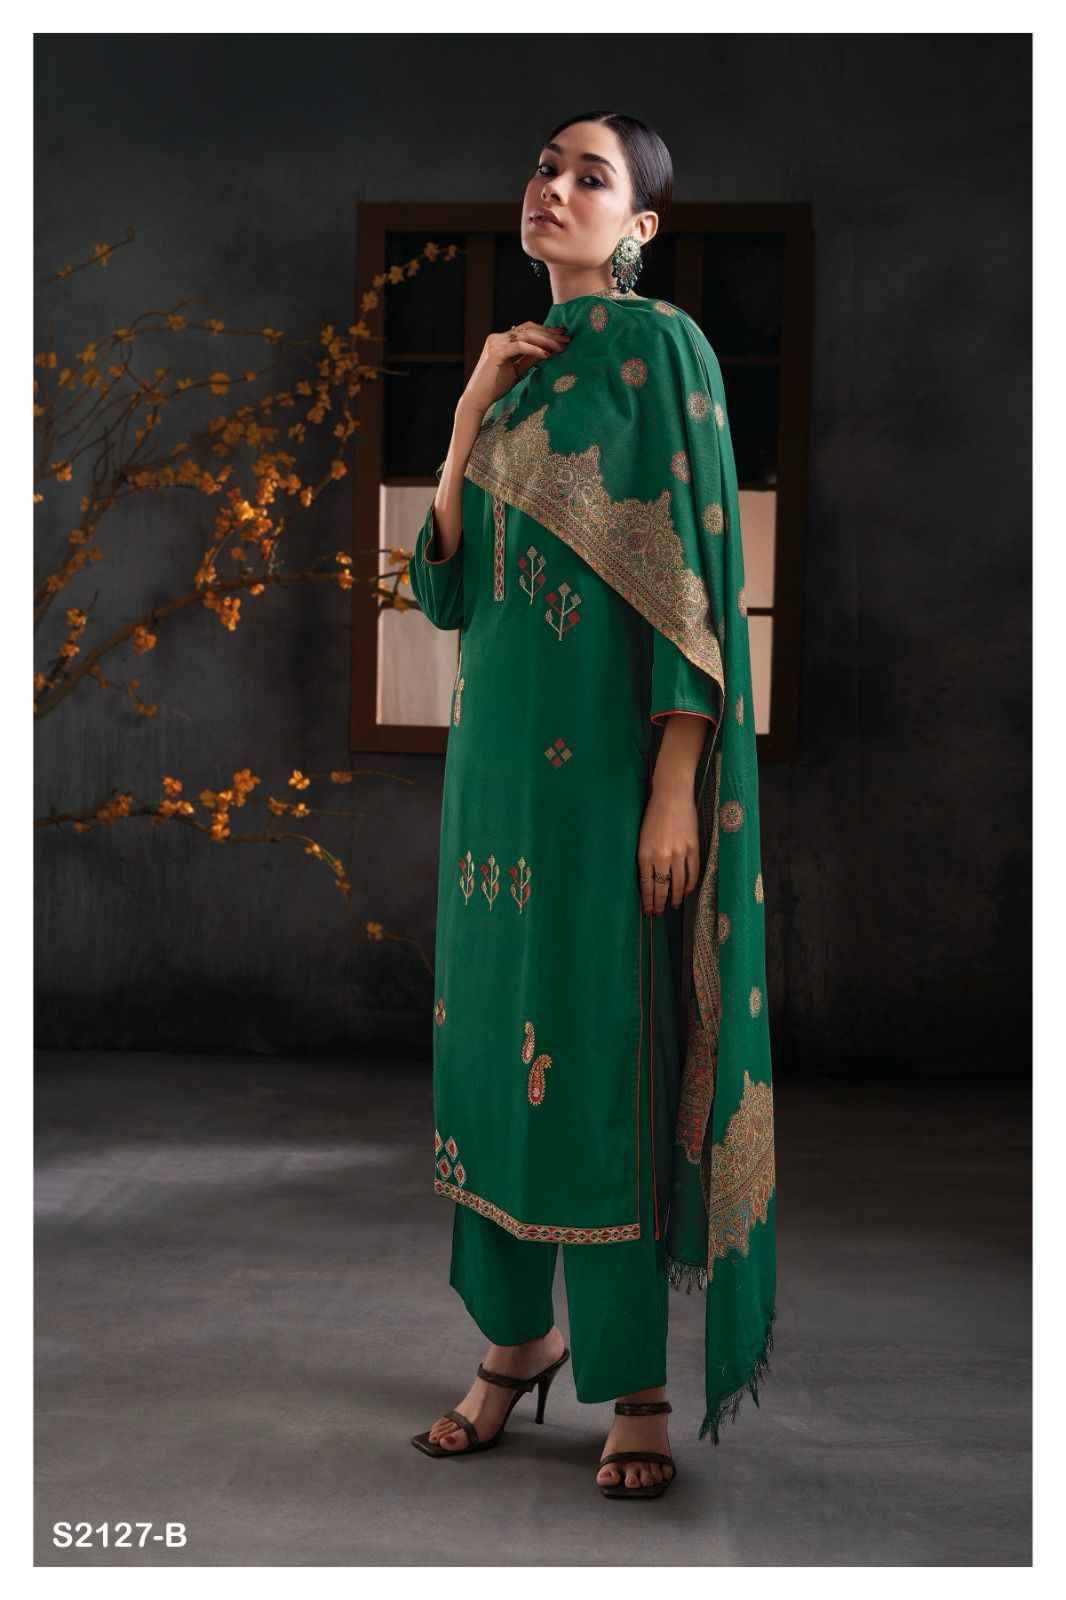 Kalavathi-2127 By Ganga Fashion 2127-A To 2127-C Series Beautiful Festive Suits Colorful Stylish Fancy Casual Wear & Ethnic Wear Pure Pashmina Digital Print Dresses At Wholesale Price